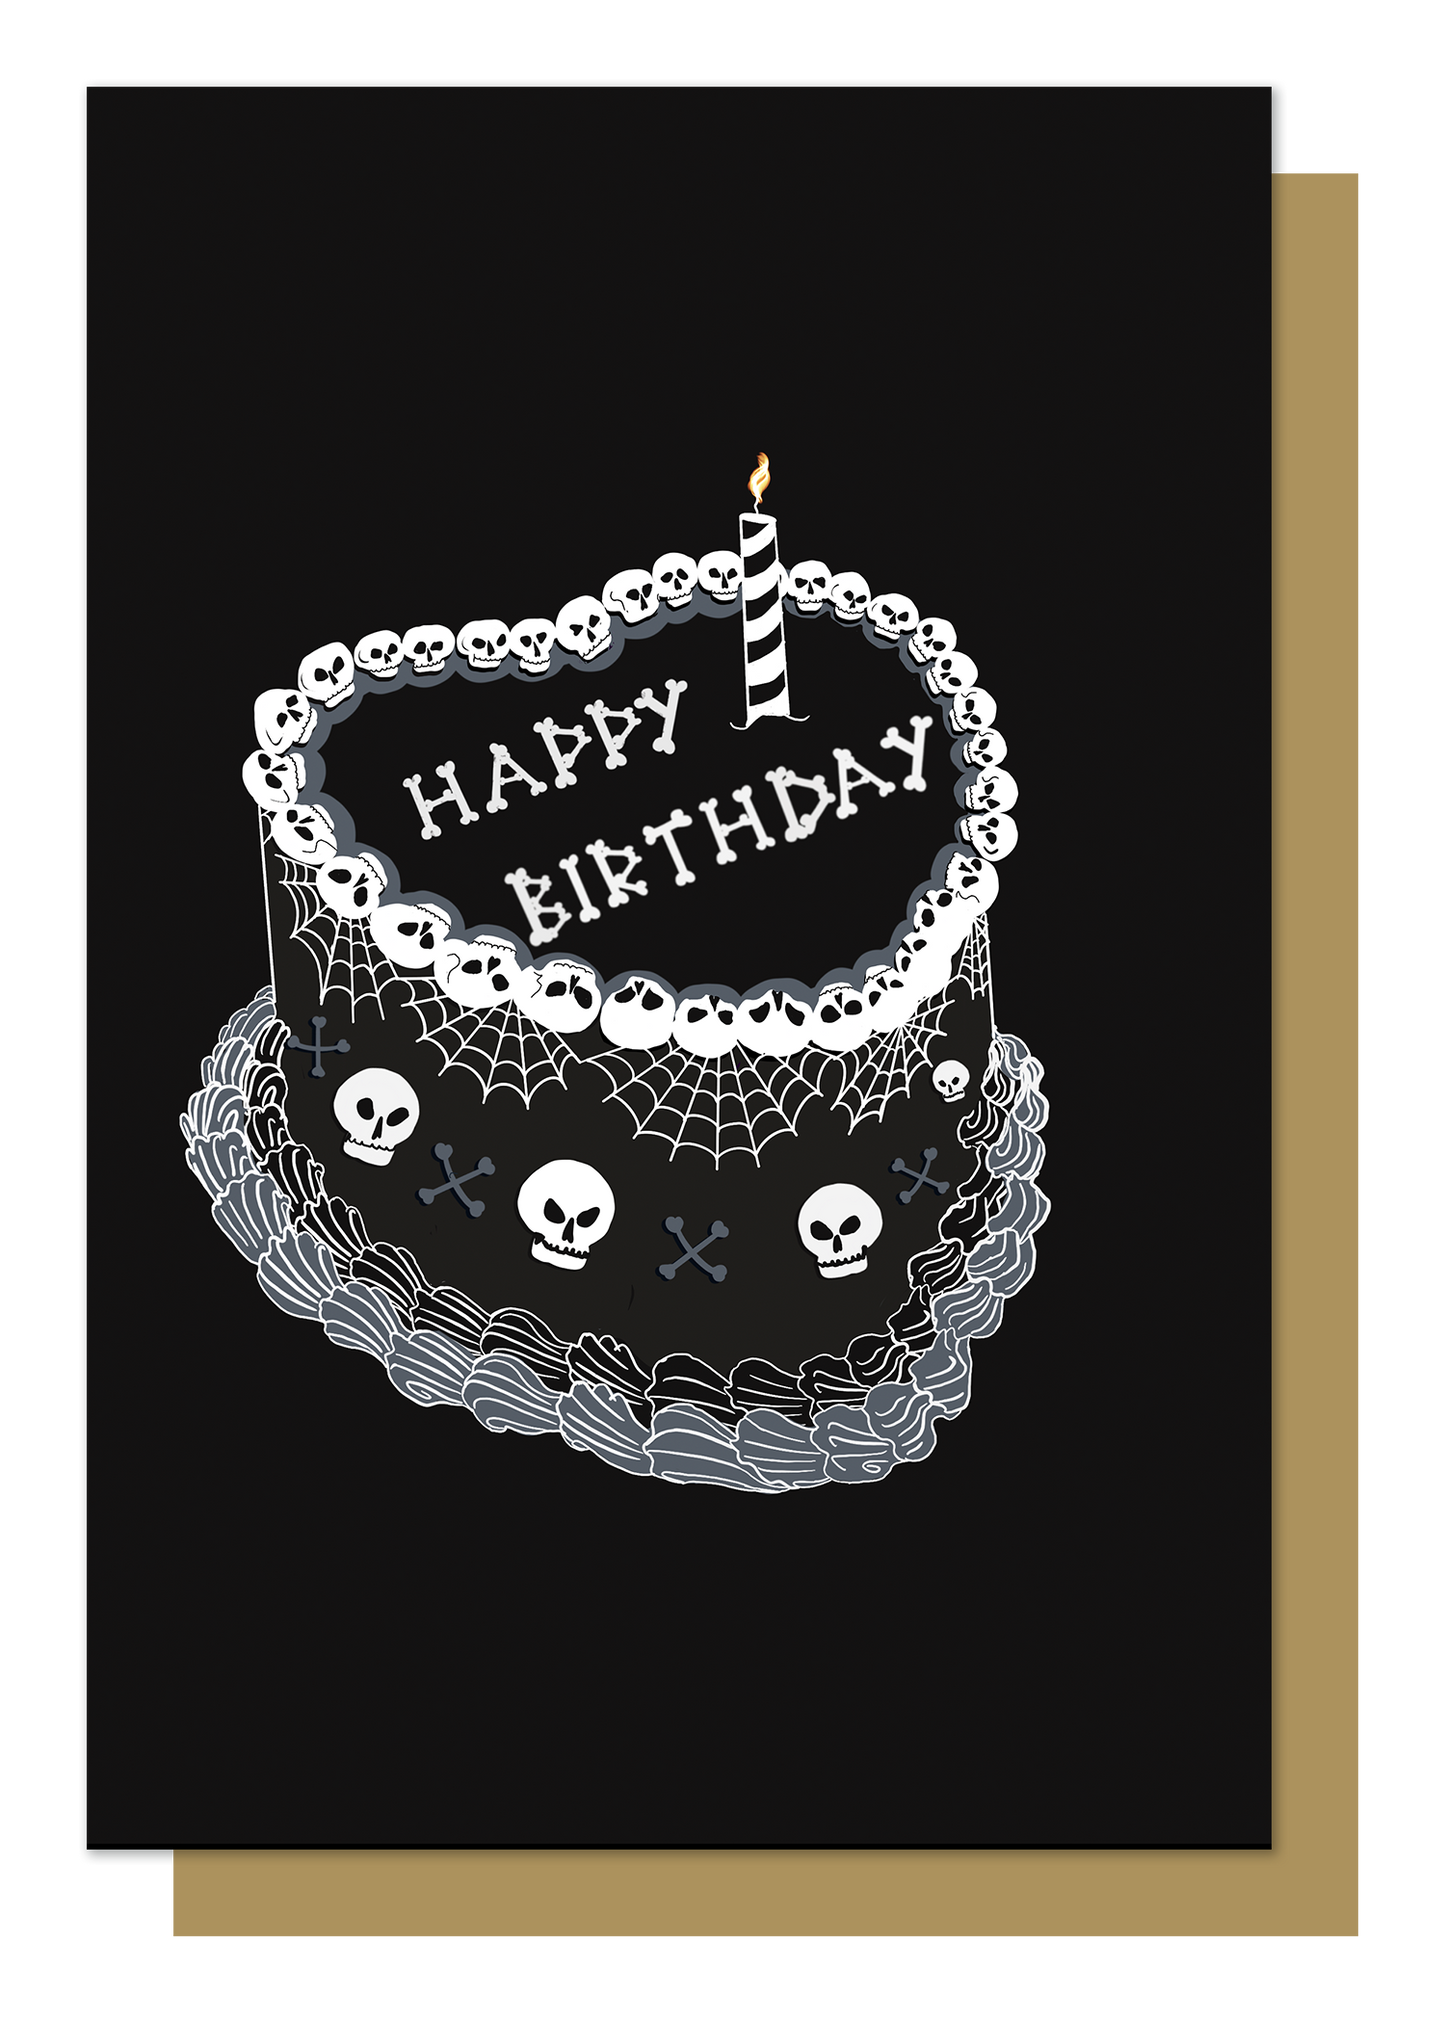 Gothic Birthday Cake Greetings Card